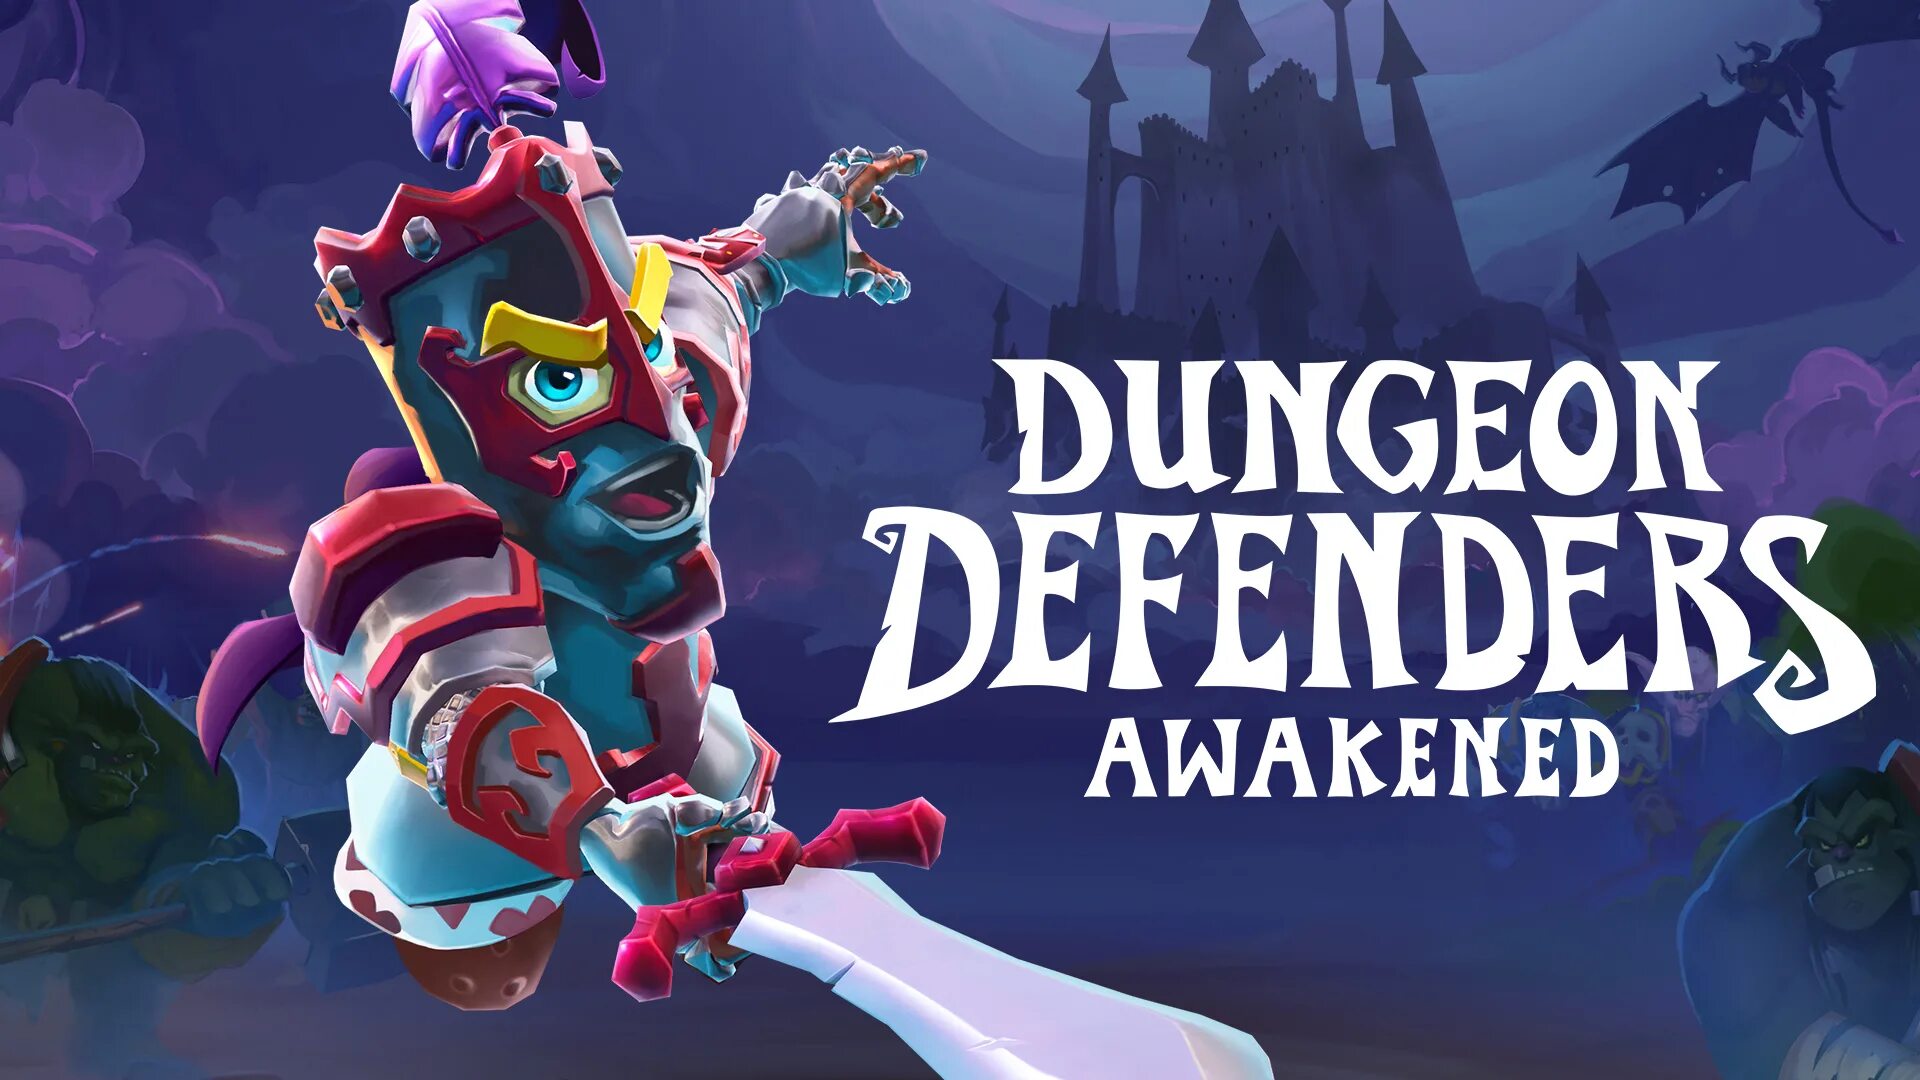 Dungeon defenders awakening. Dungeon Defenders Awakened. Dungeon Defenders 1. Dungeon Defenders: Awakened Gameplay. Yuletide Dungeon Defenders Awakened.